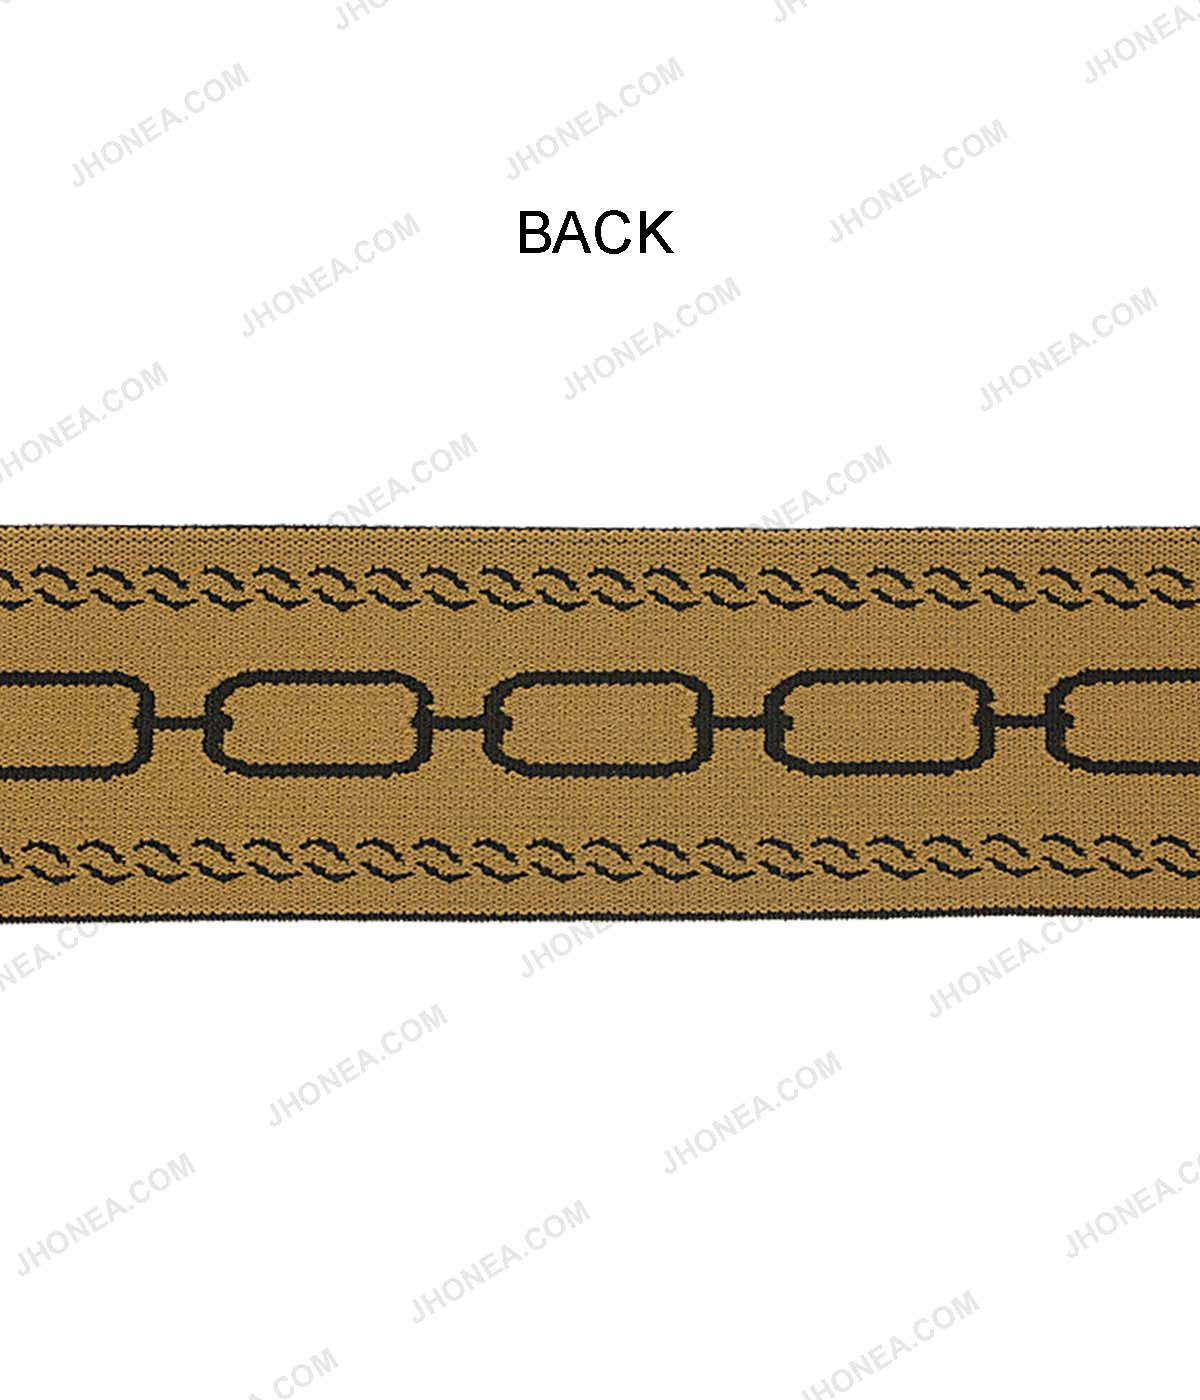 Black with Brown Classic Chain Design Soft Woven Rivil-Civil Elastic